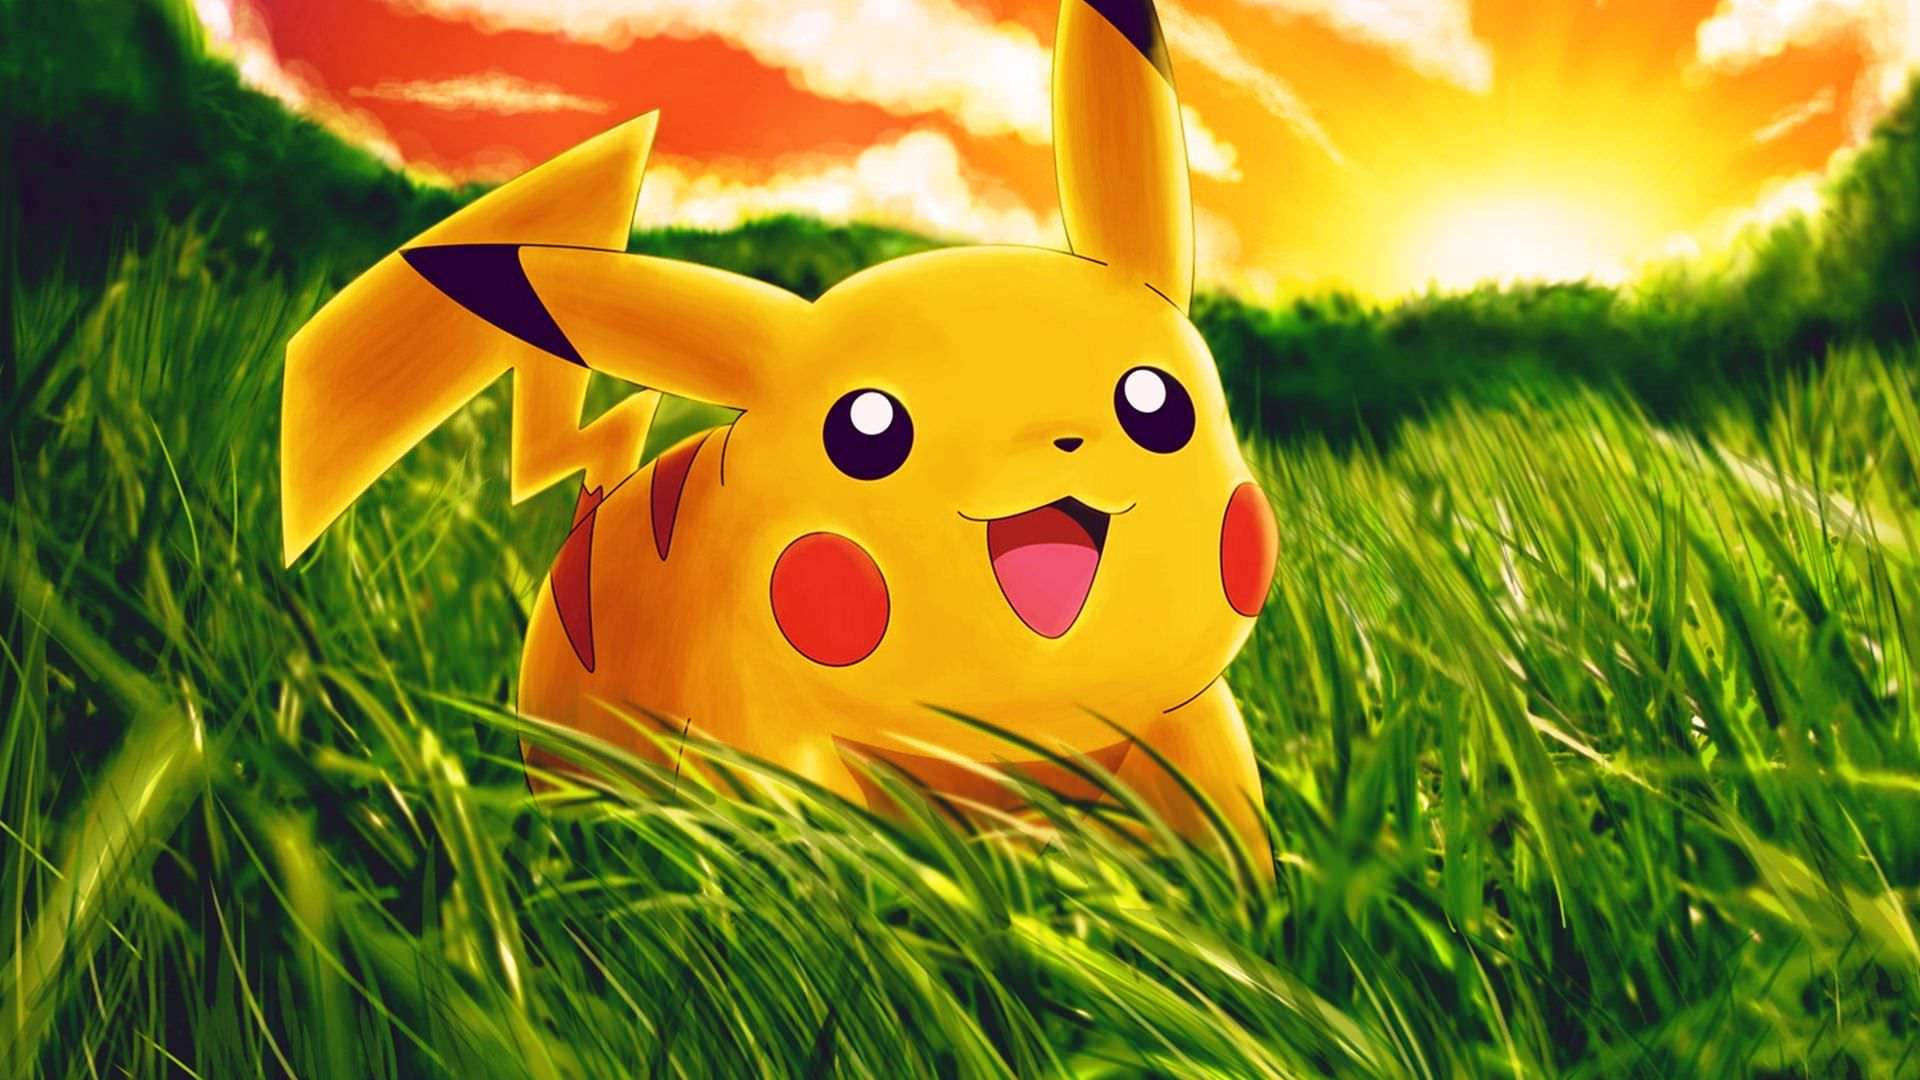 Say Hello to Pikachu! Wallpaper